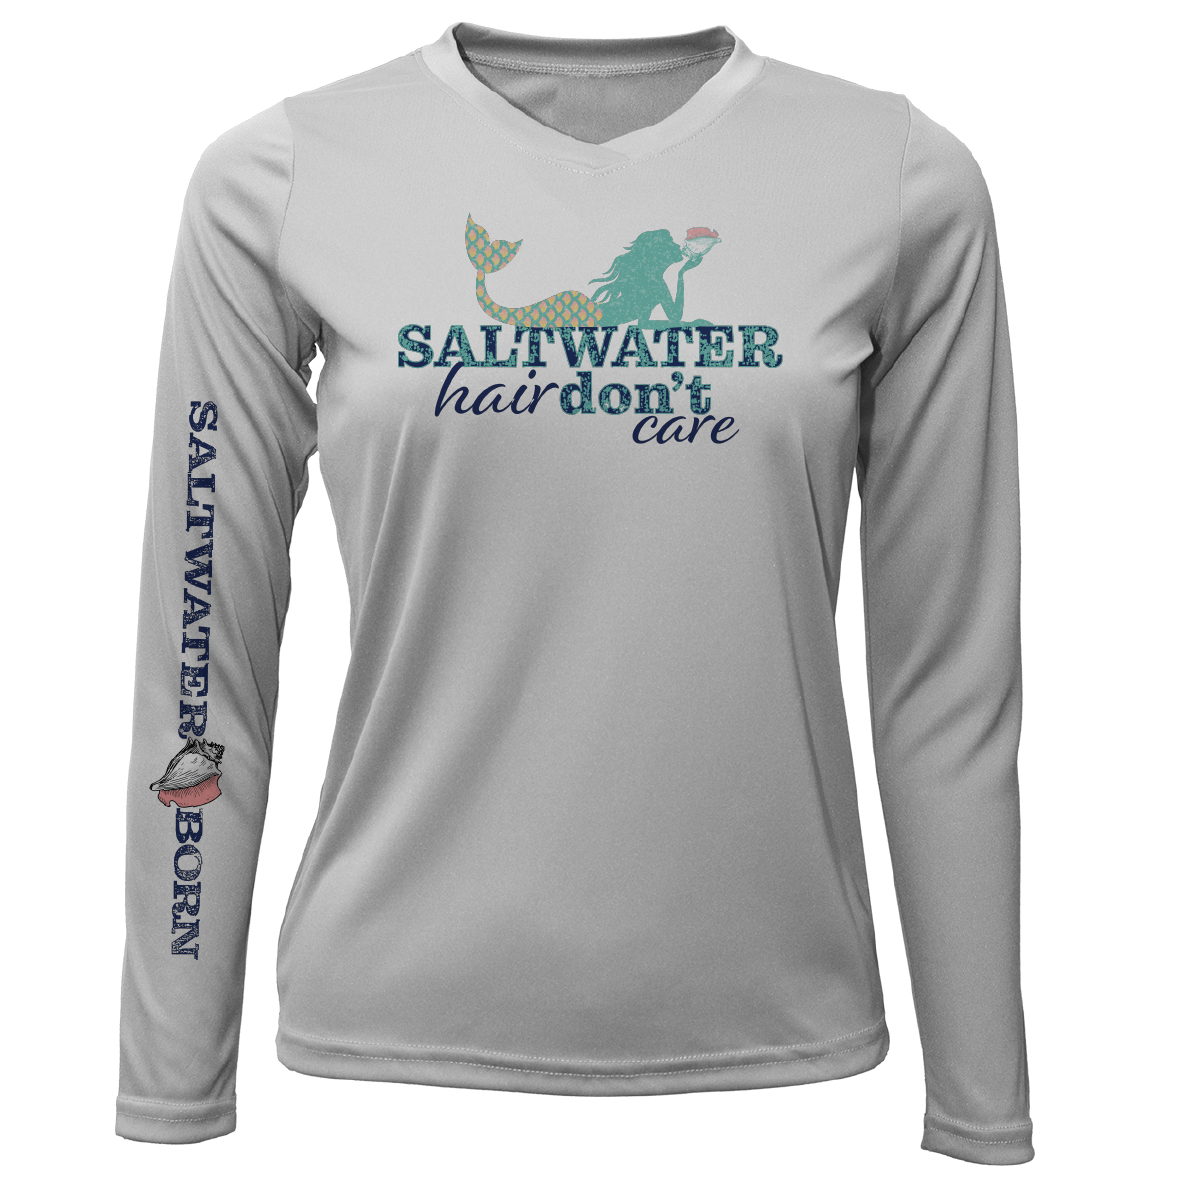 Saltwater Born Shirts M / SILVER Tarpon Springs, FL "Saltwater Hair Don't Care" Long Sleeve UPF 50+ Dry-Fit Shirt